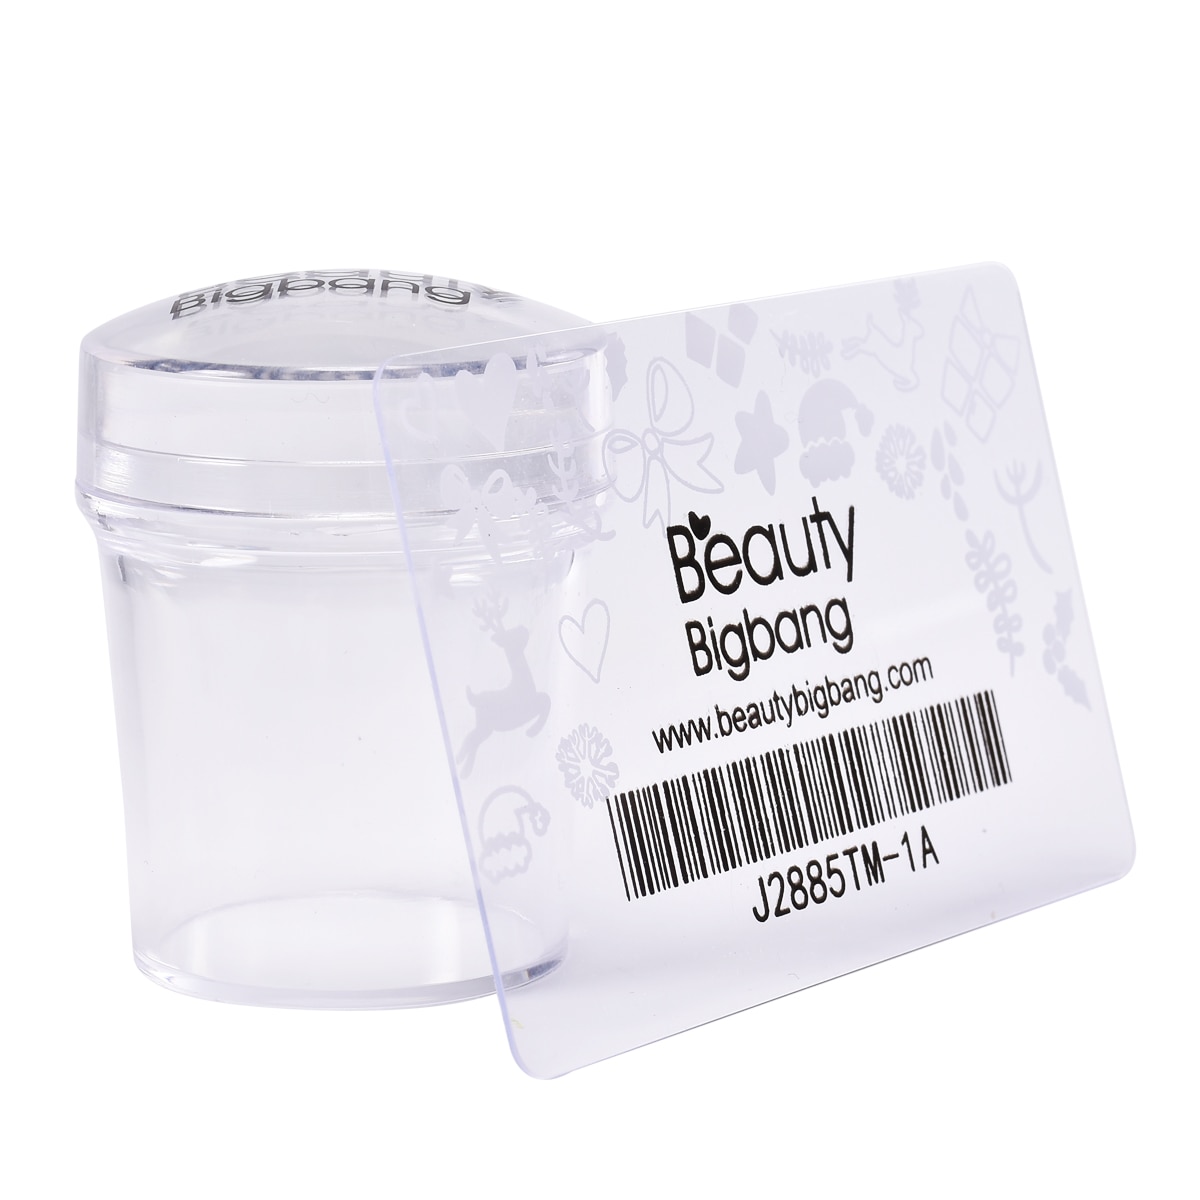 Beauty BigBang 4cm Nail Art Clear Jelly Stamper Marshmallow Stamper + Schraper